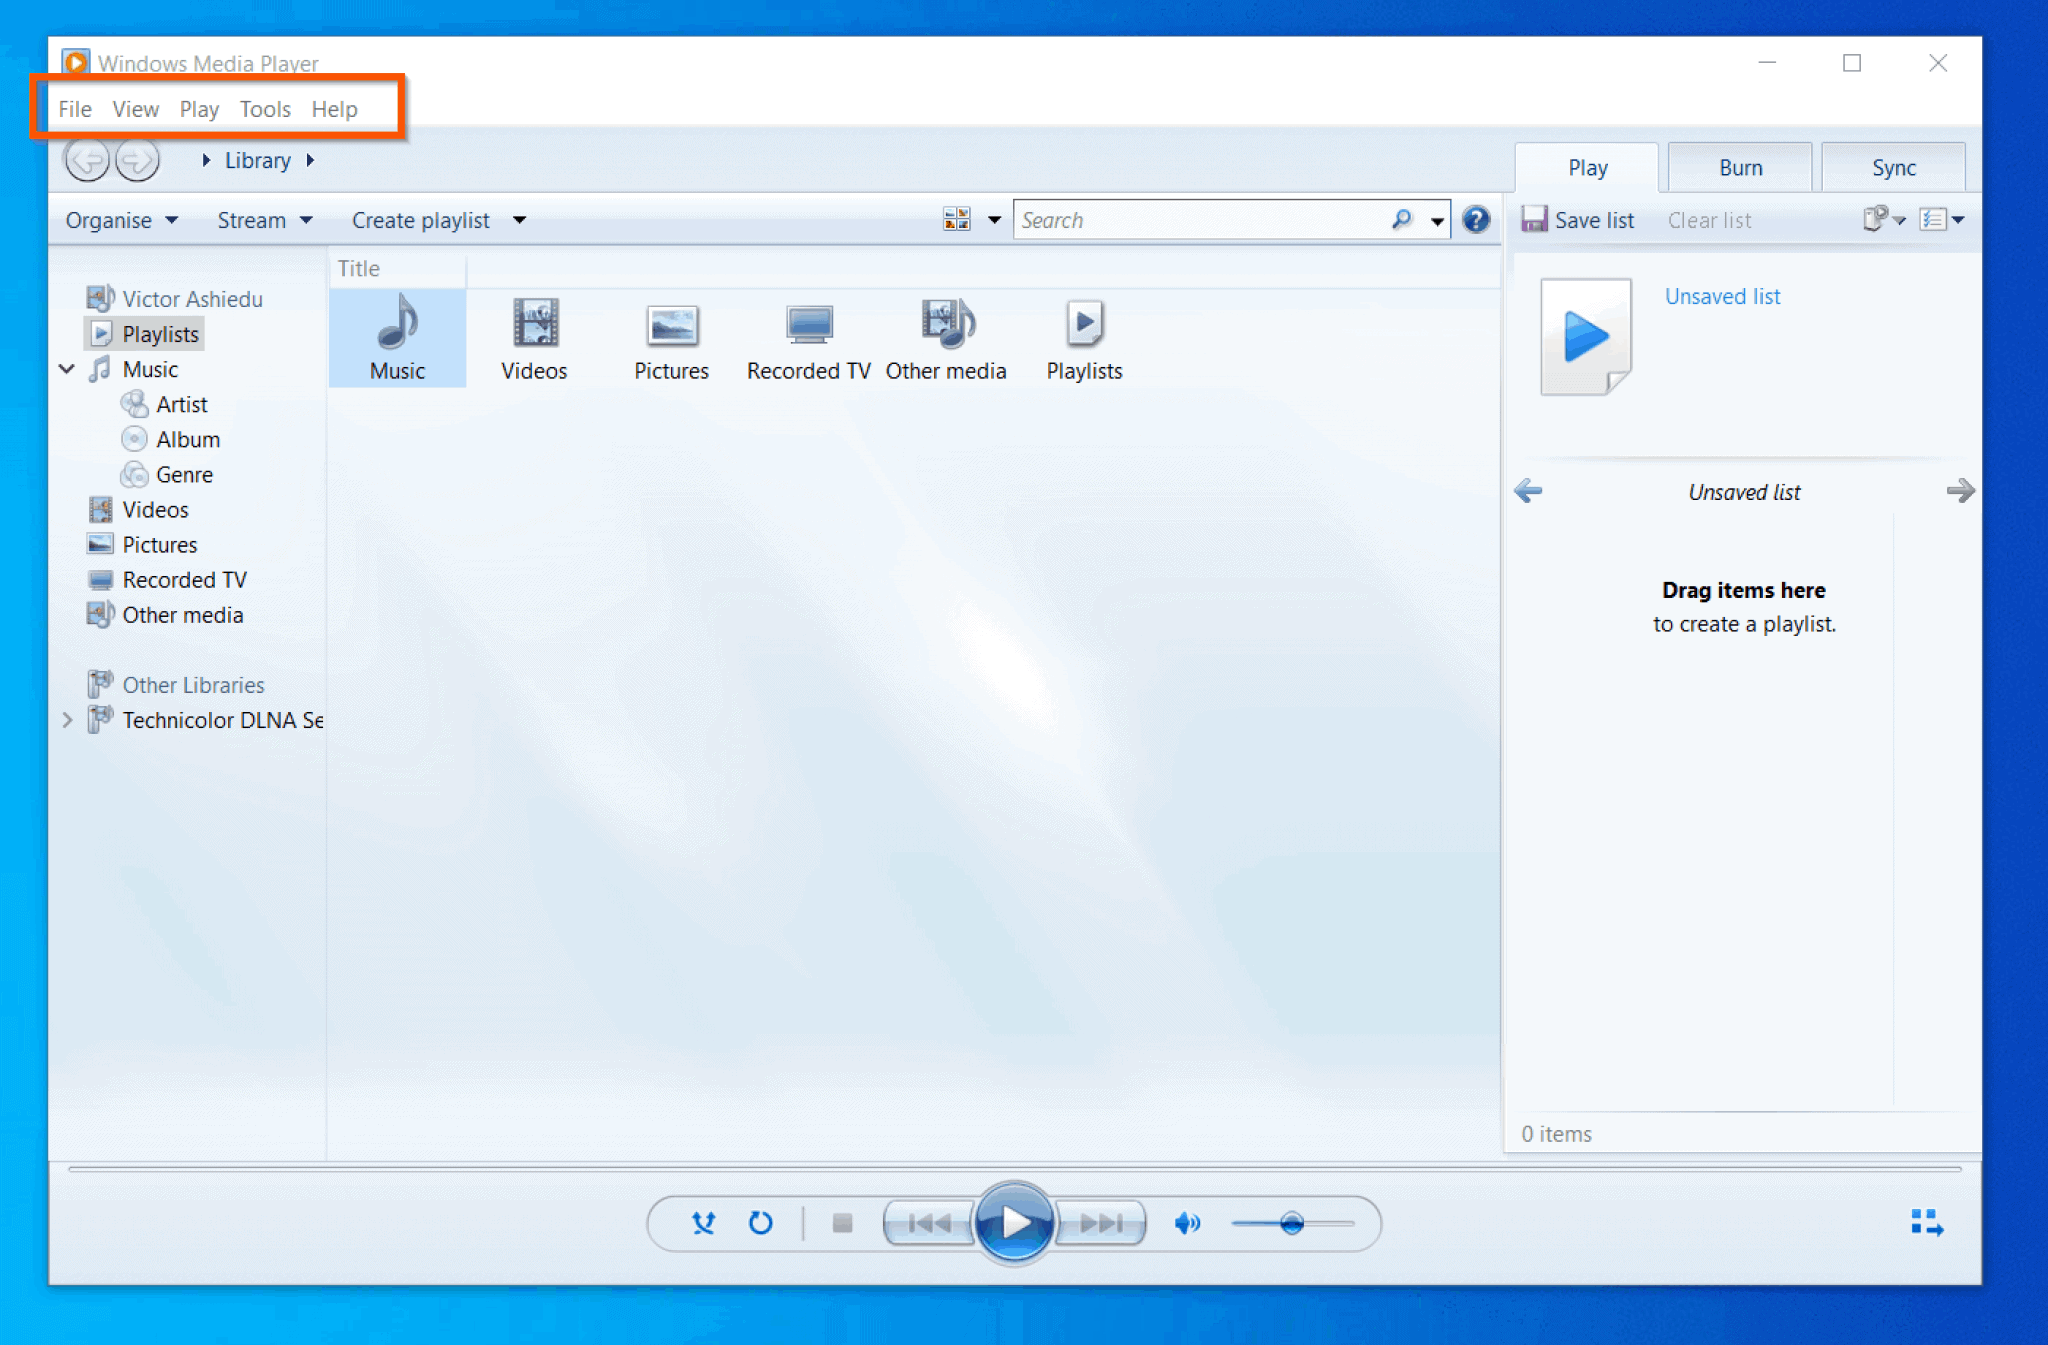 windows media player 10 free download